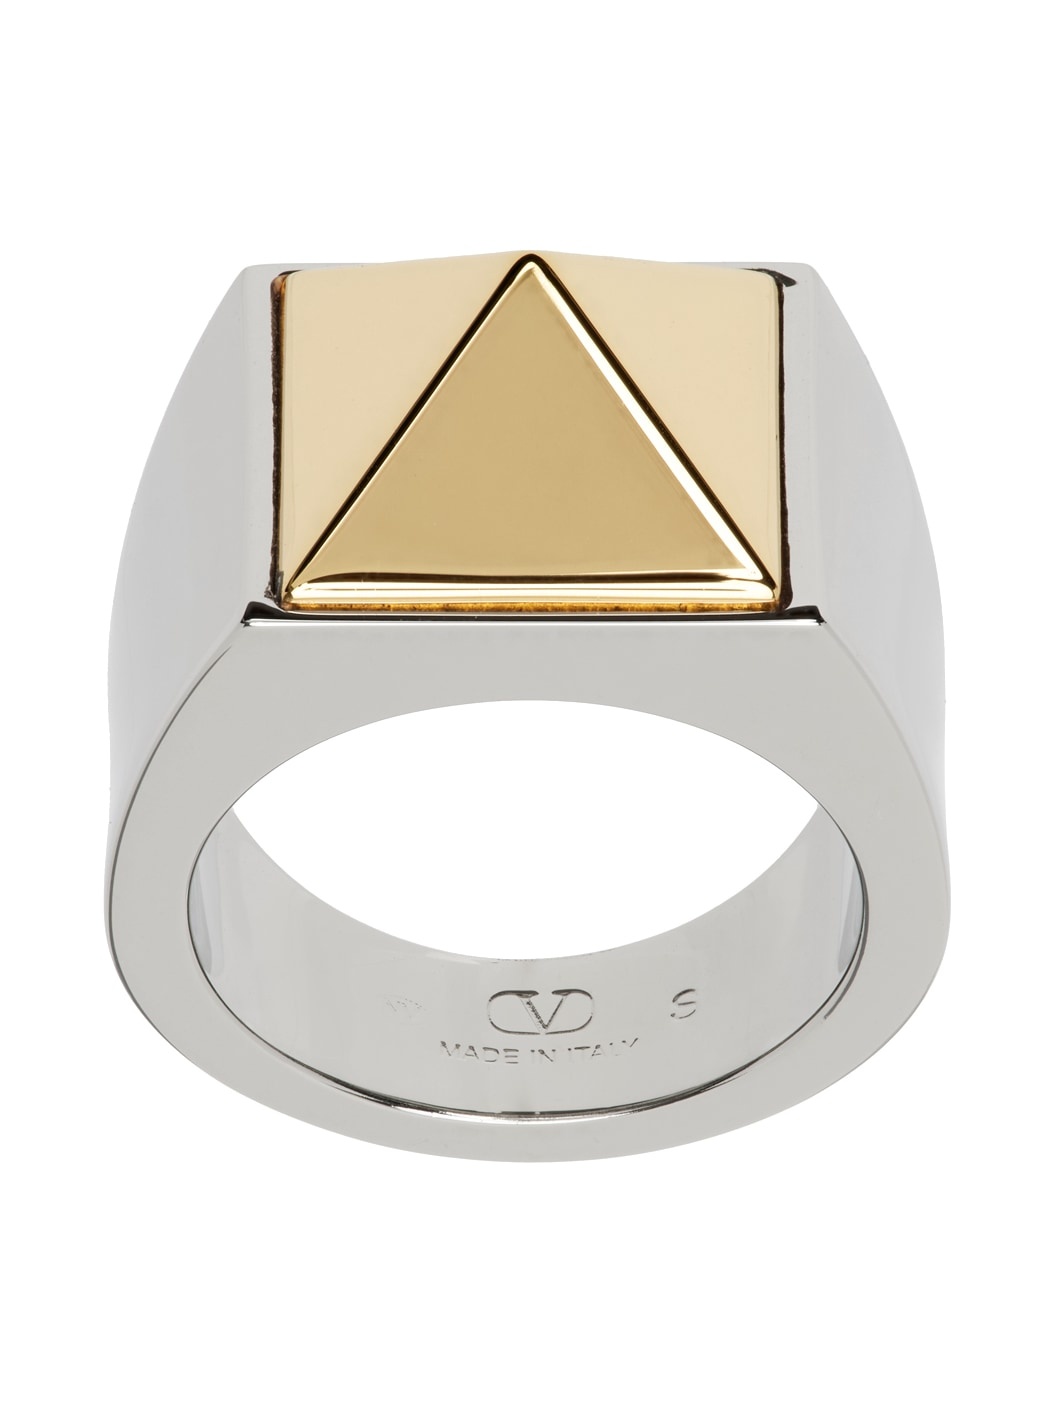 Silver & Gold Pyramid Stud Ring - 1